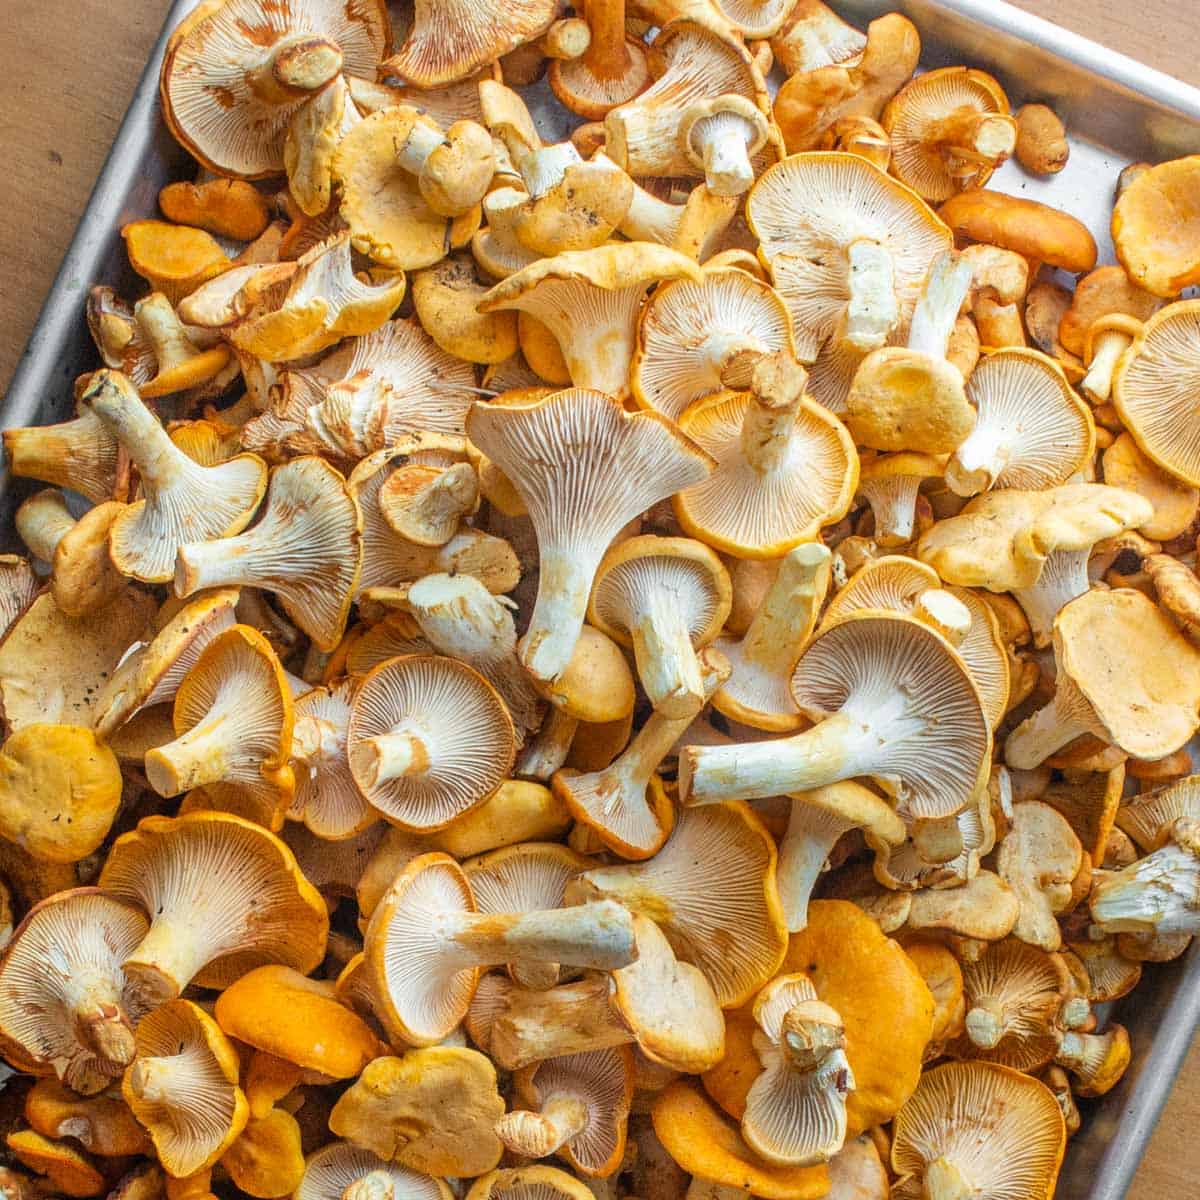 Dig Deeper Into Local Mushrooms!